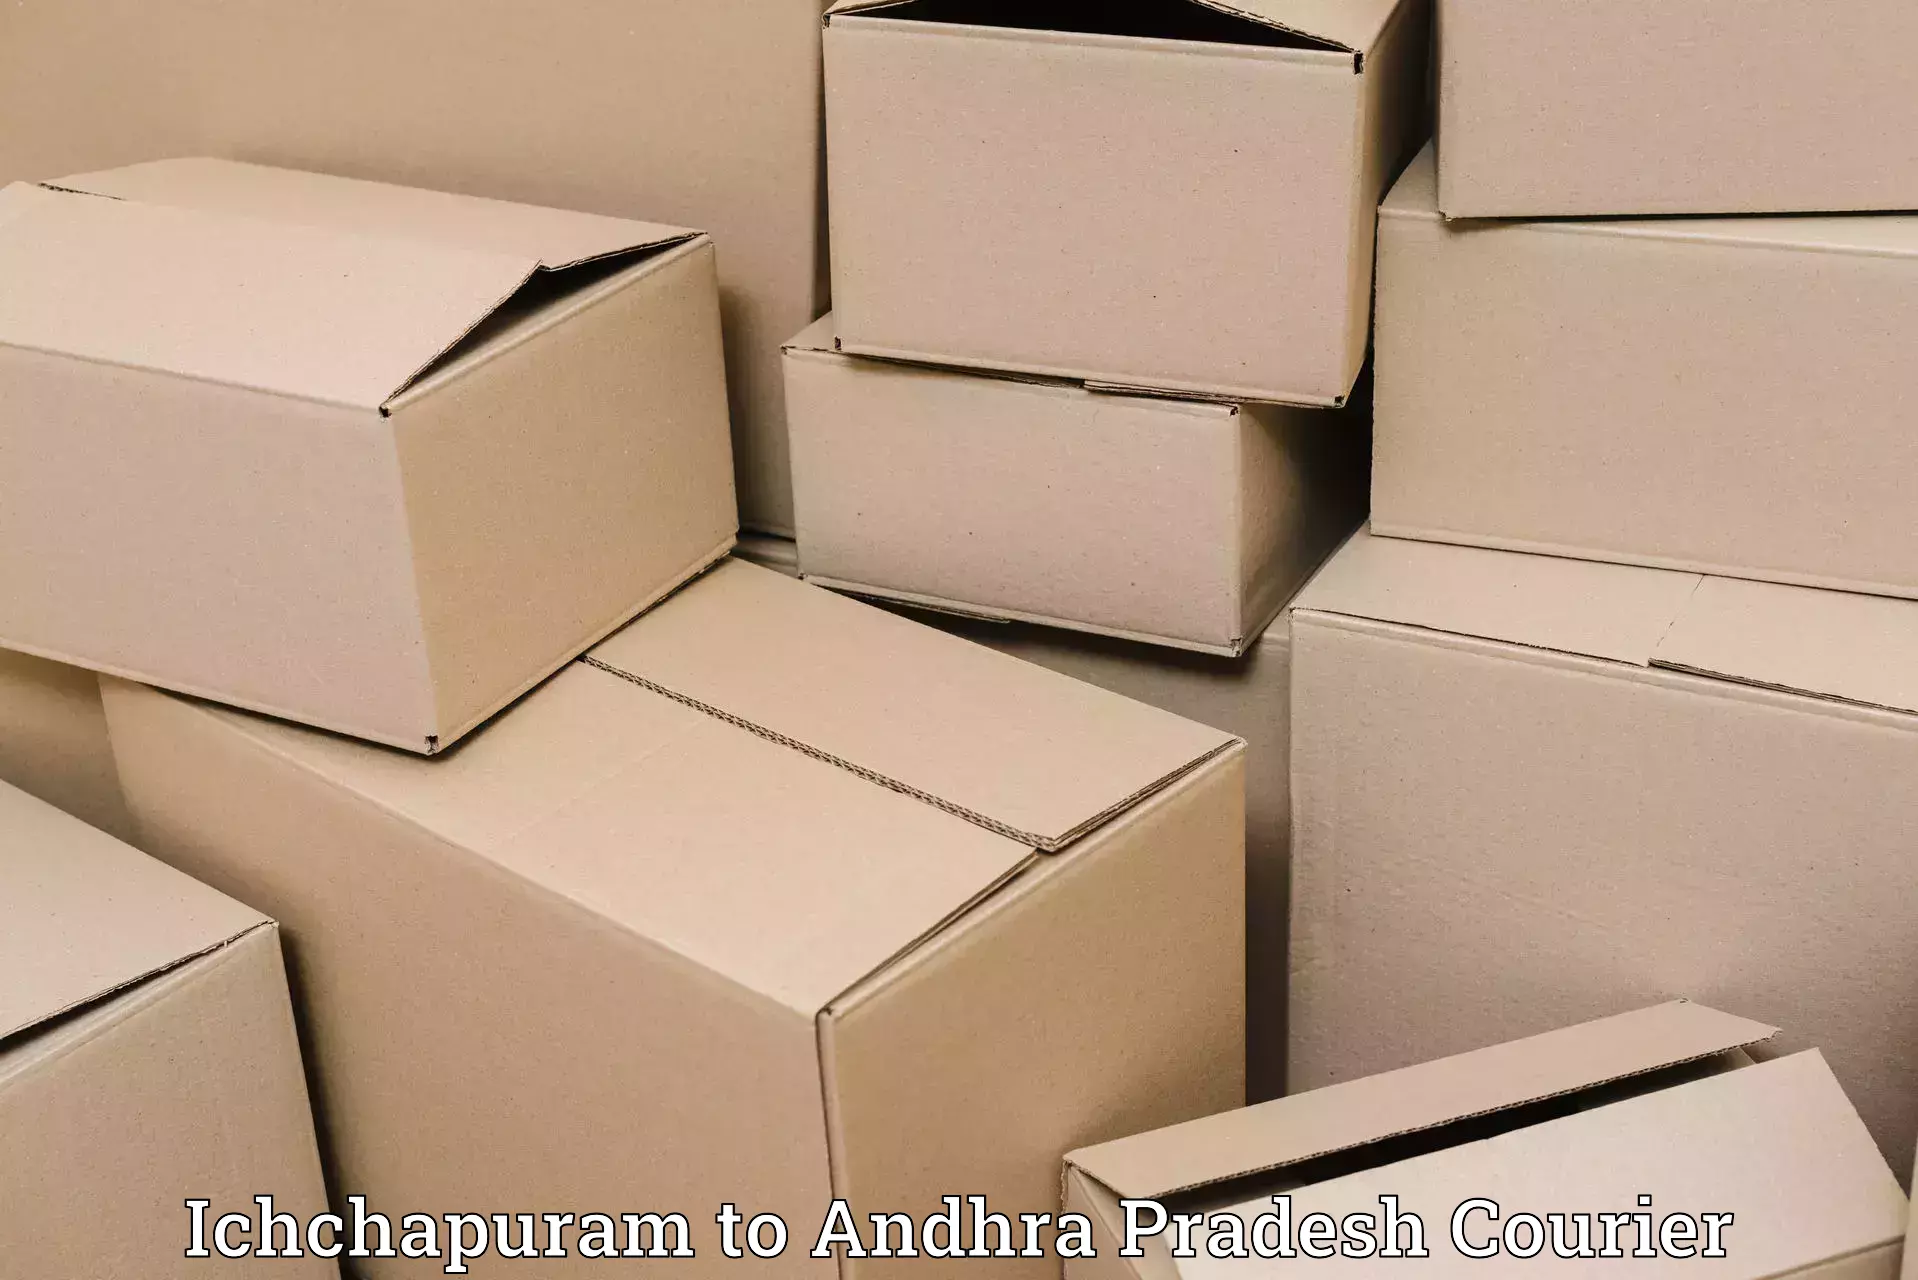 Package delivery network Ichchapuram to Veldurthi